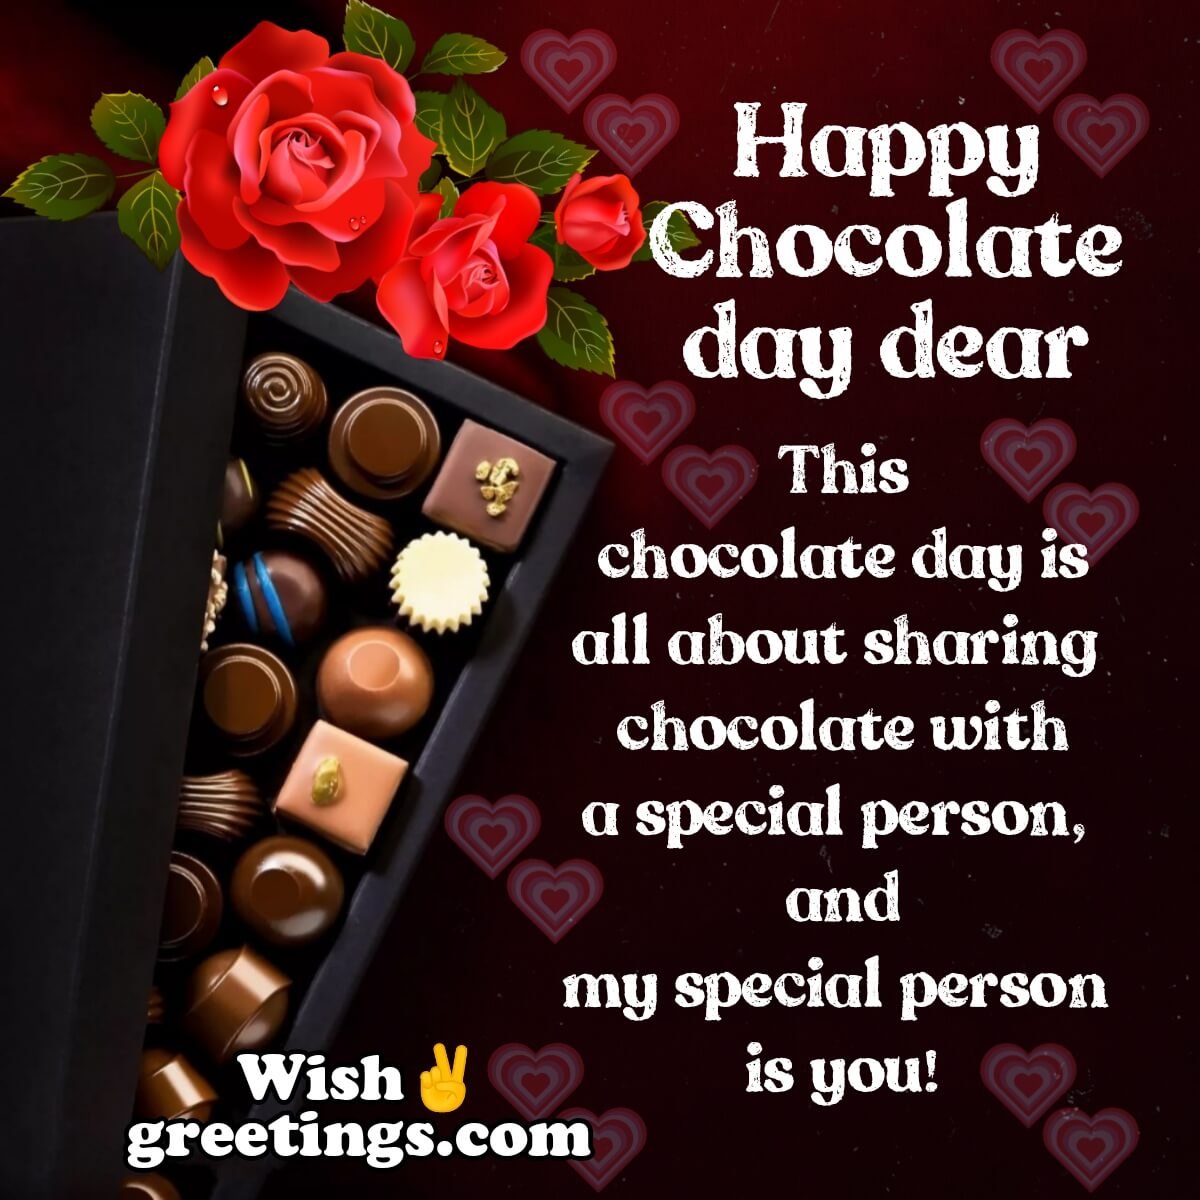 Happy Chocolate Day Dear